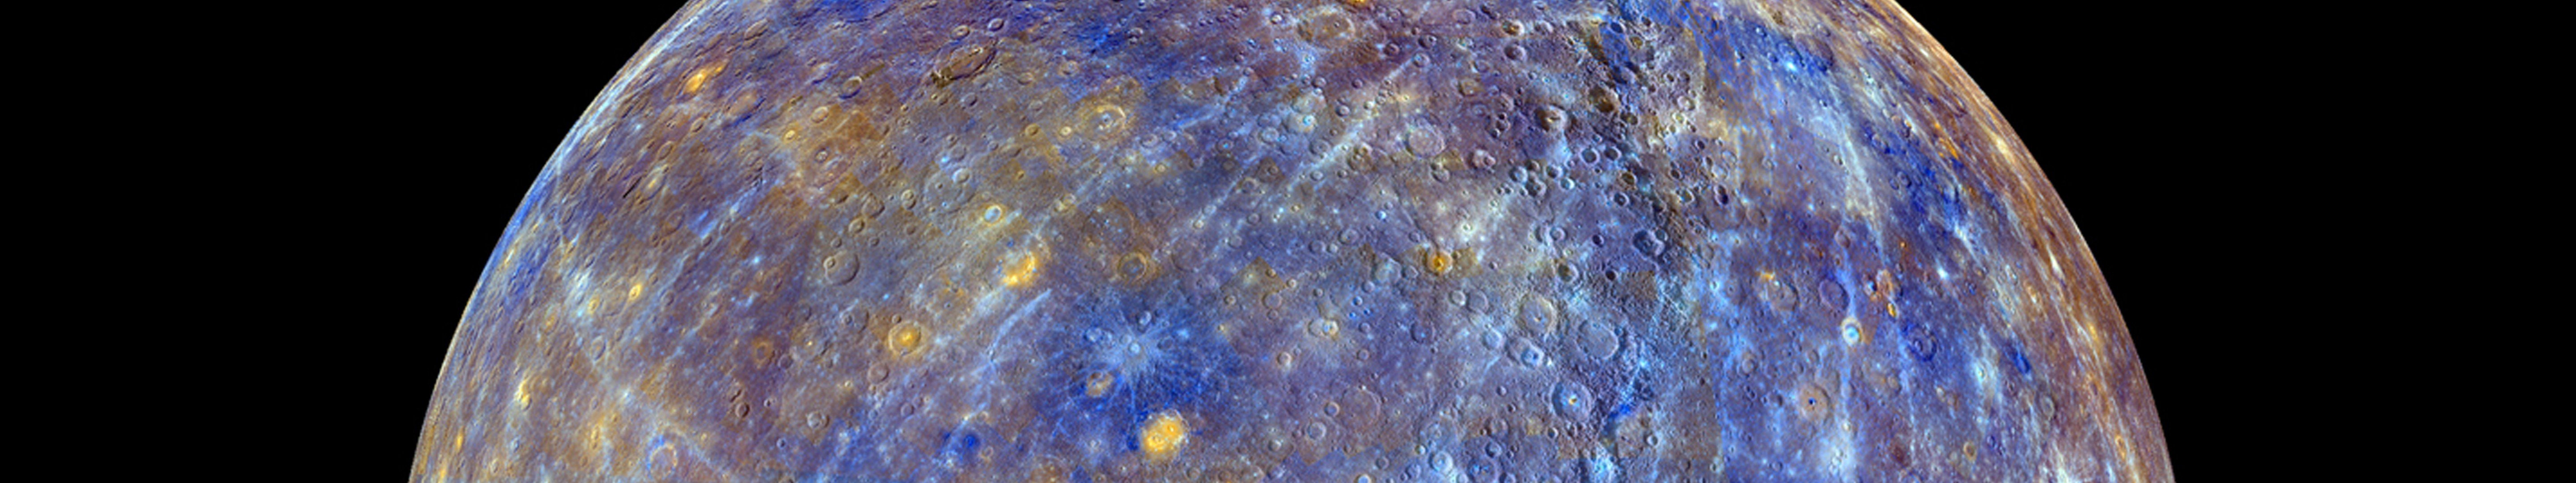 Mercury, Space, NASA, Blue, Gold, Black, MESSENGER, Planet, Sun Wallpaper